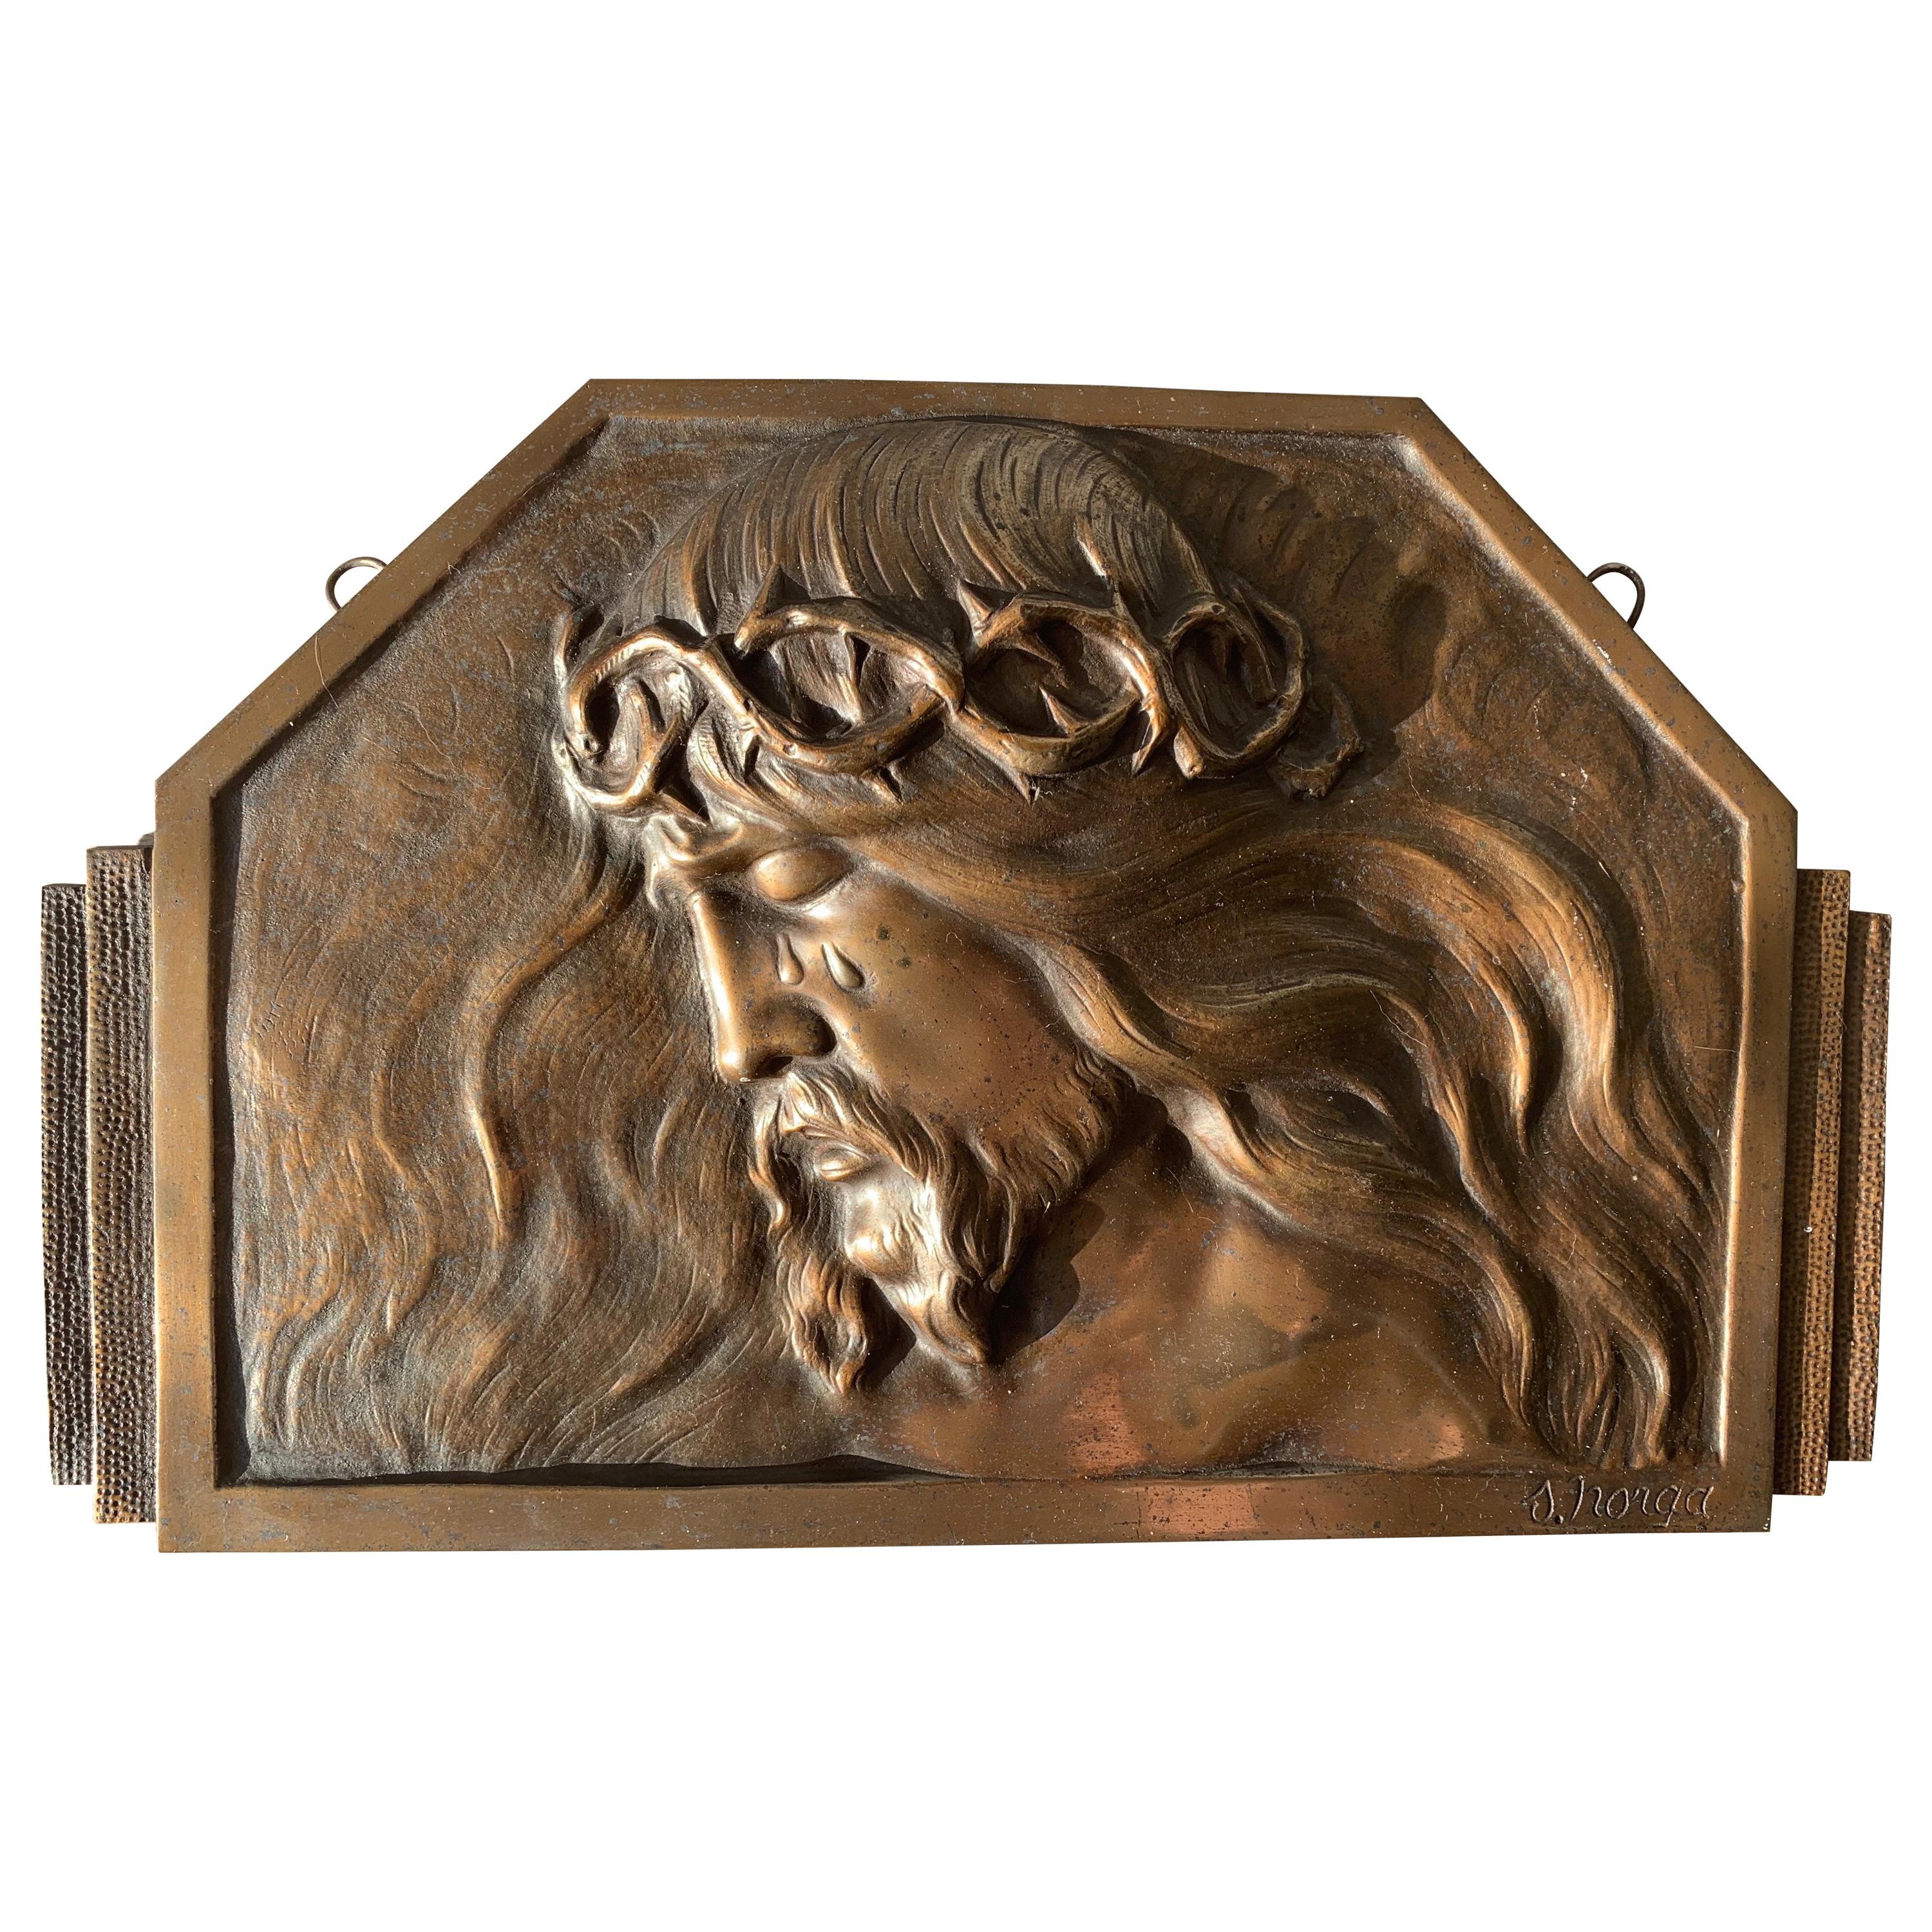 Art Deco Bronze Religious Art Wall Plaque in Relief Depicts Suffering of Christ